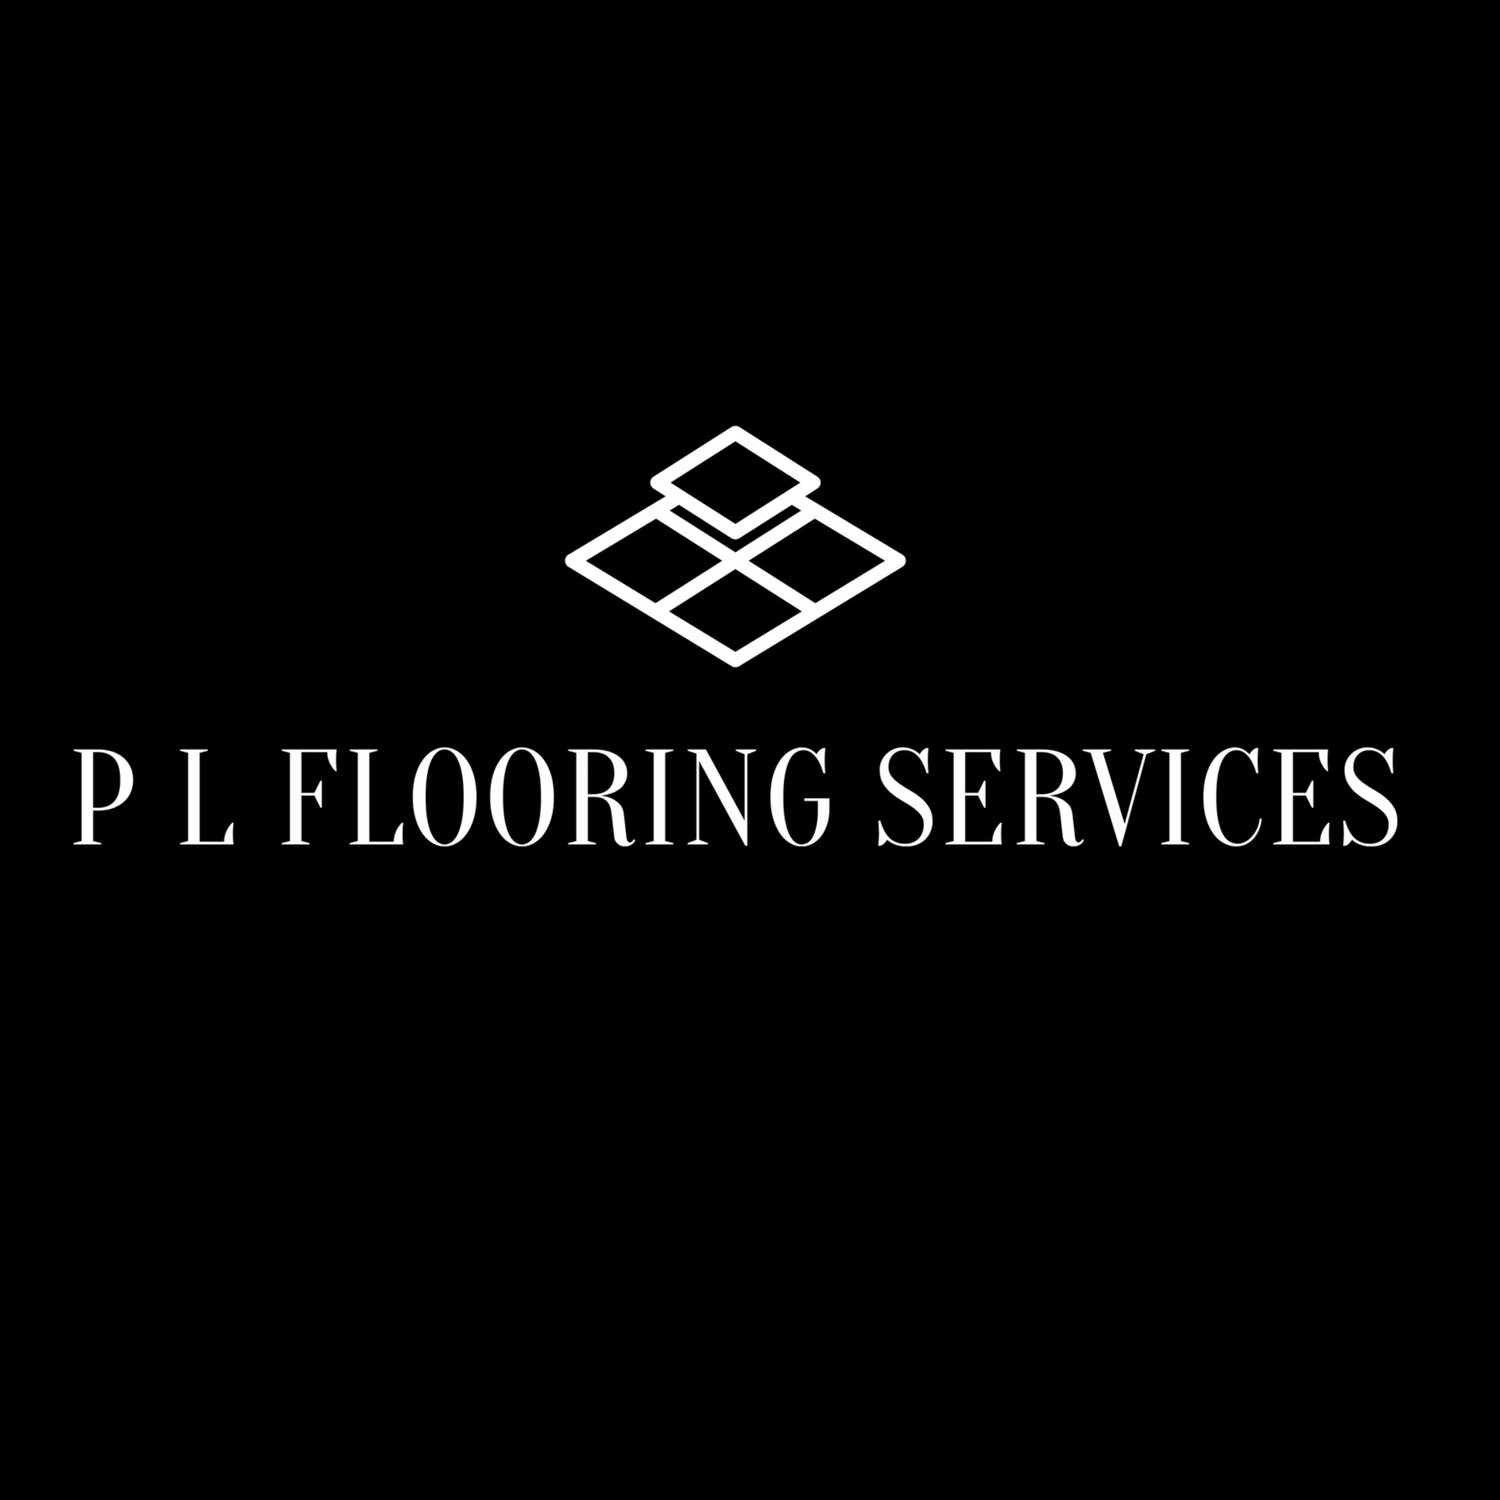 P L Flooring Services